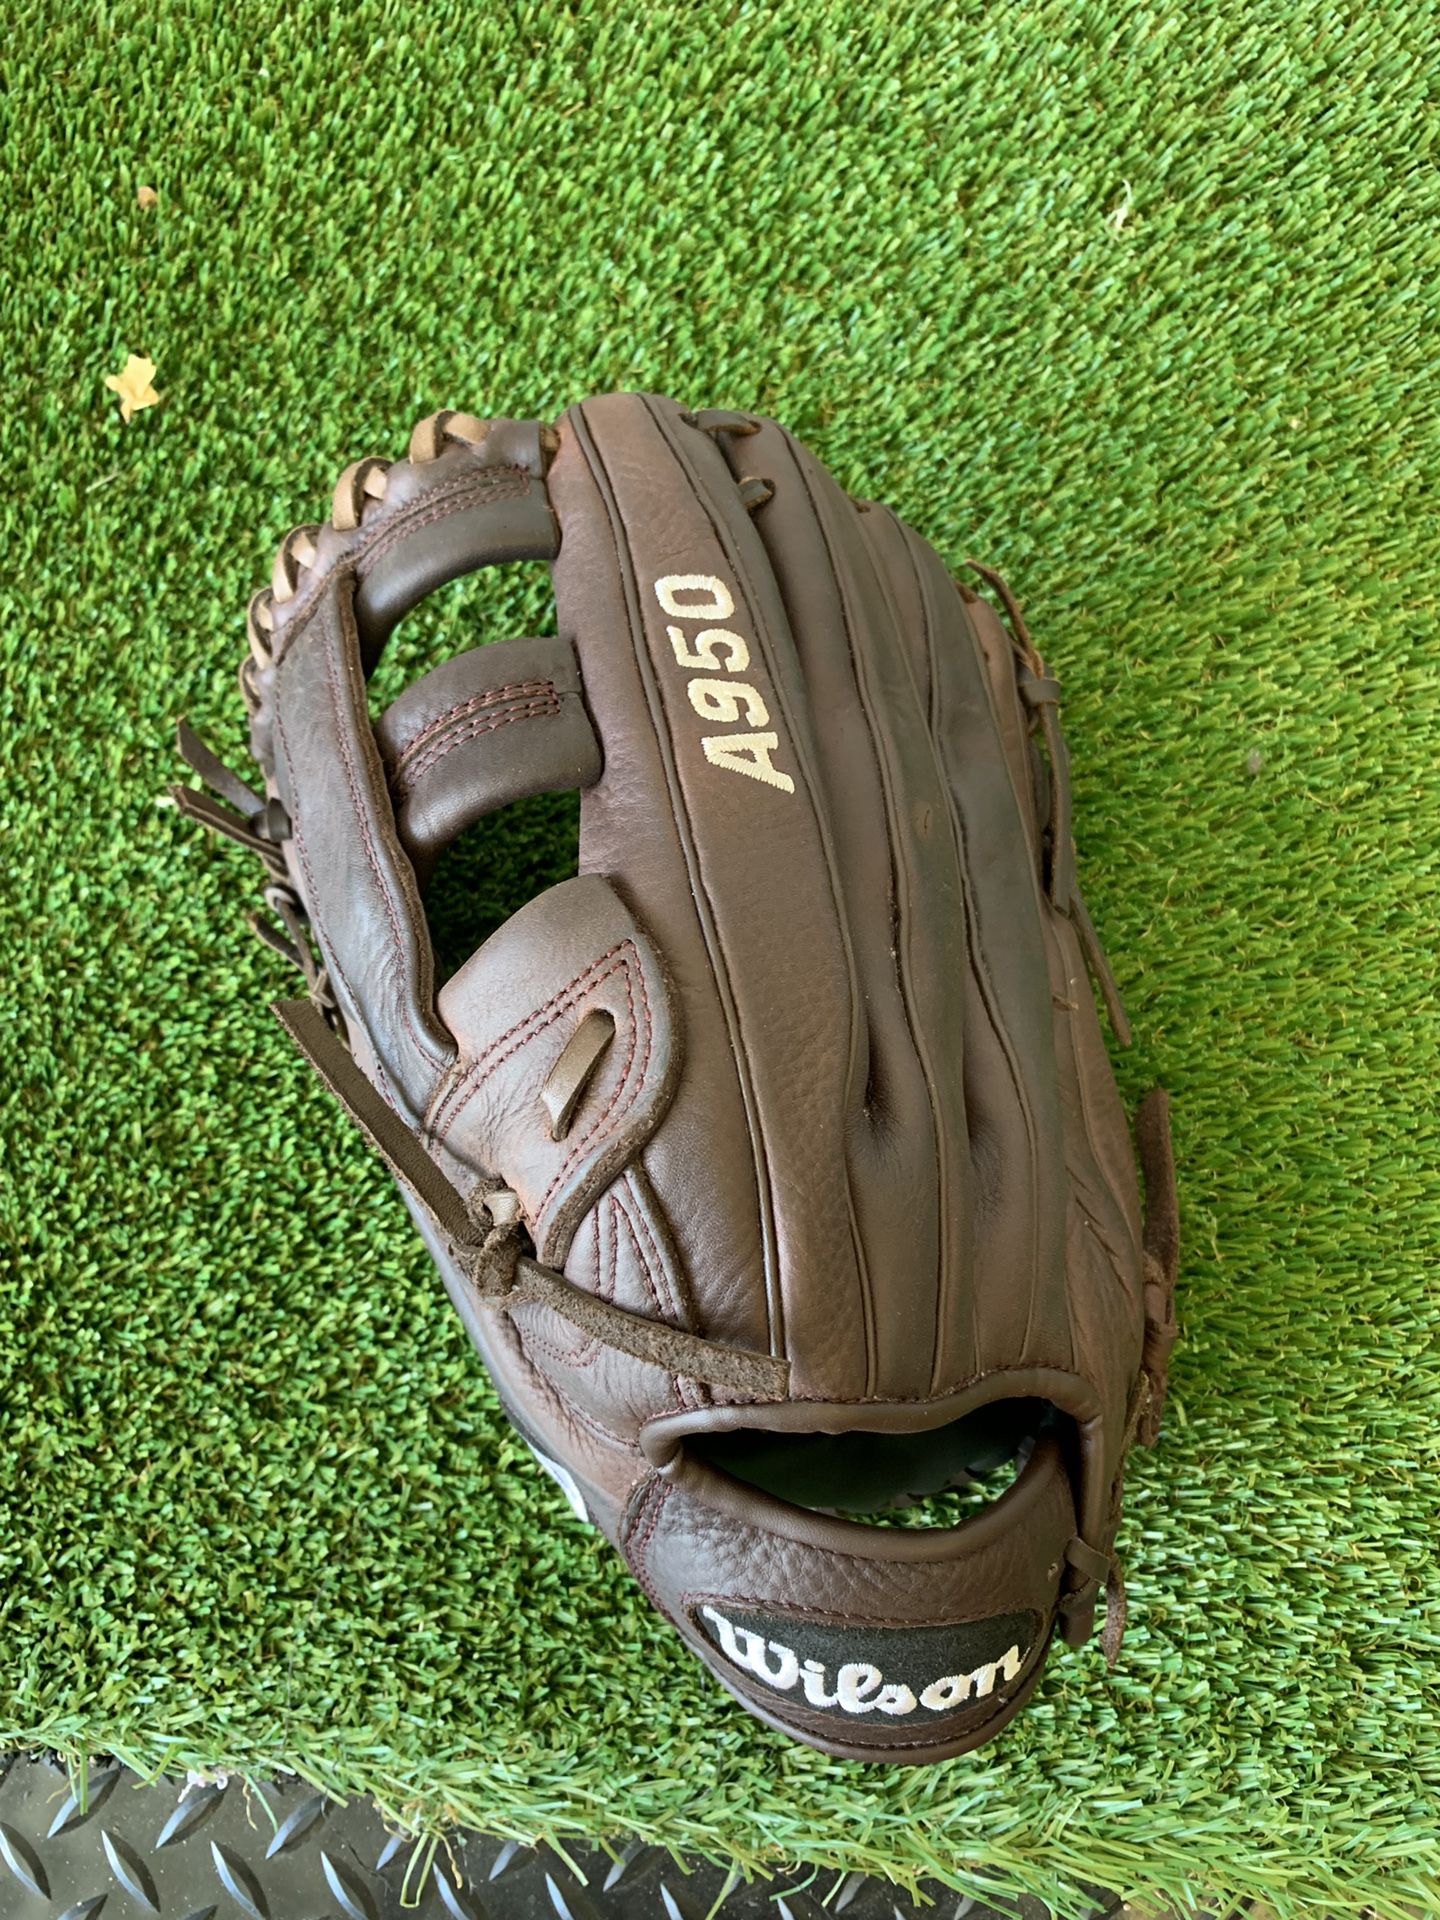 Lefty Wilson A950 13 inch Baseball Softball Glove